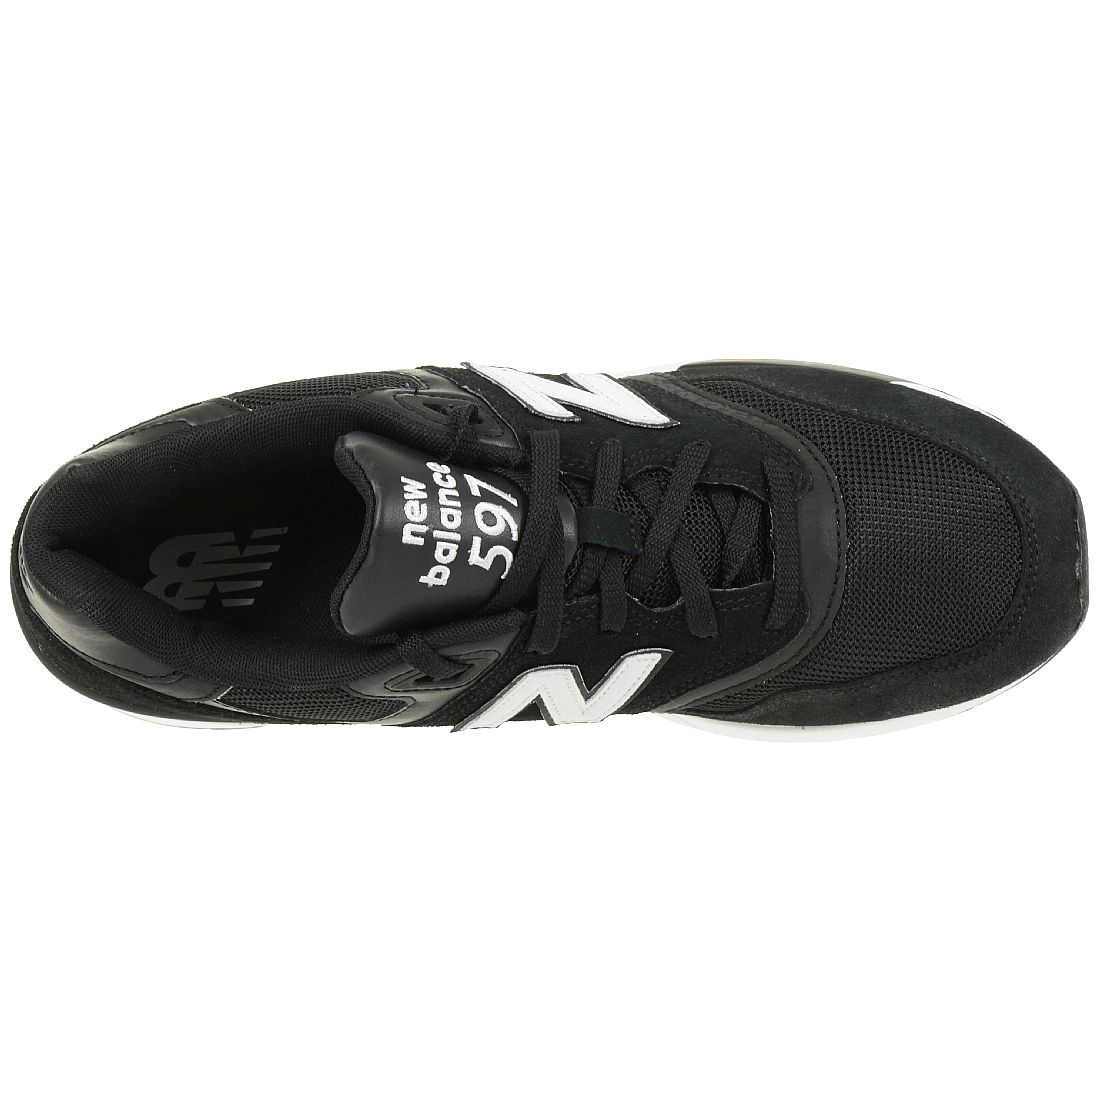 New Balance ML597AAC Classic Sneaker Herren Laufschuhe schwarz 597